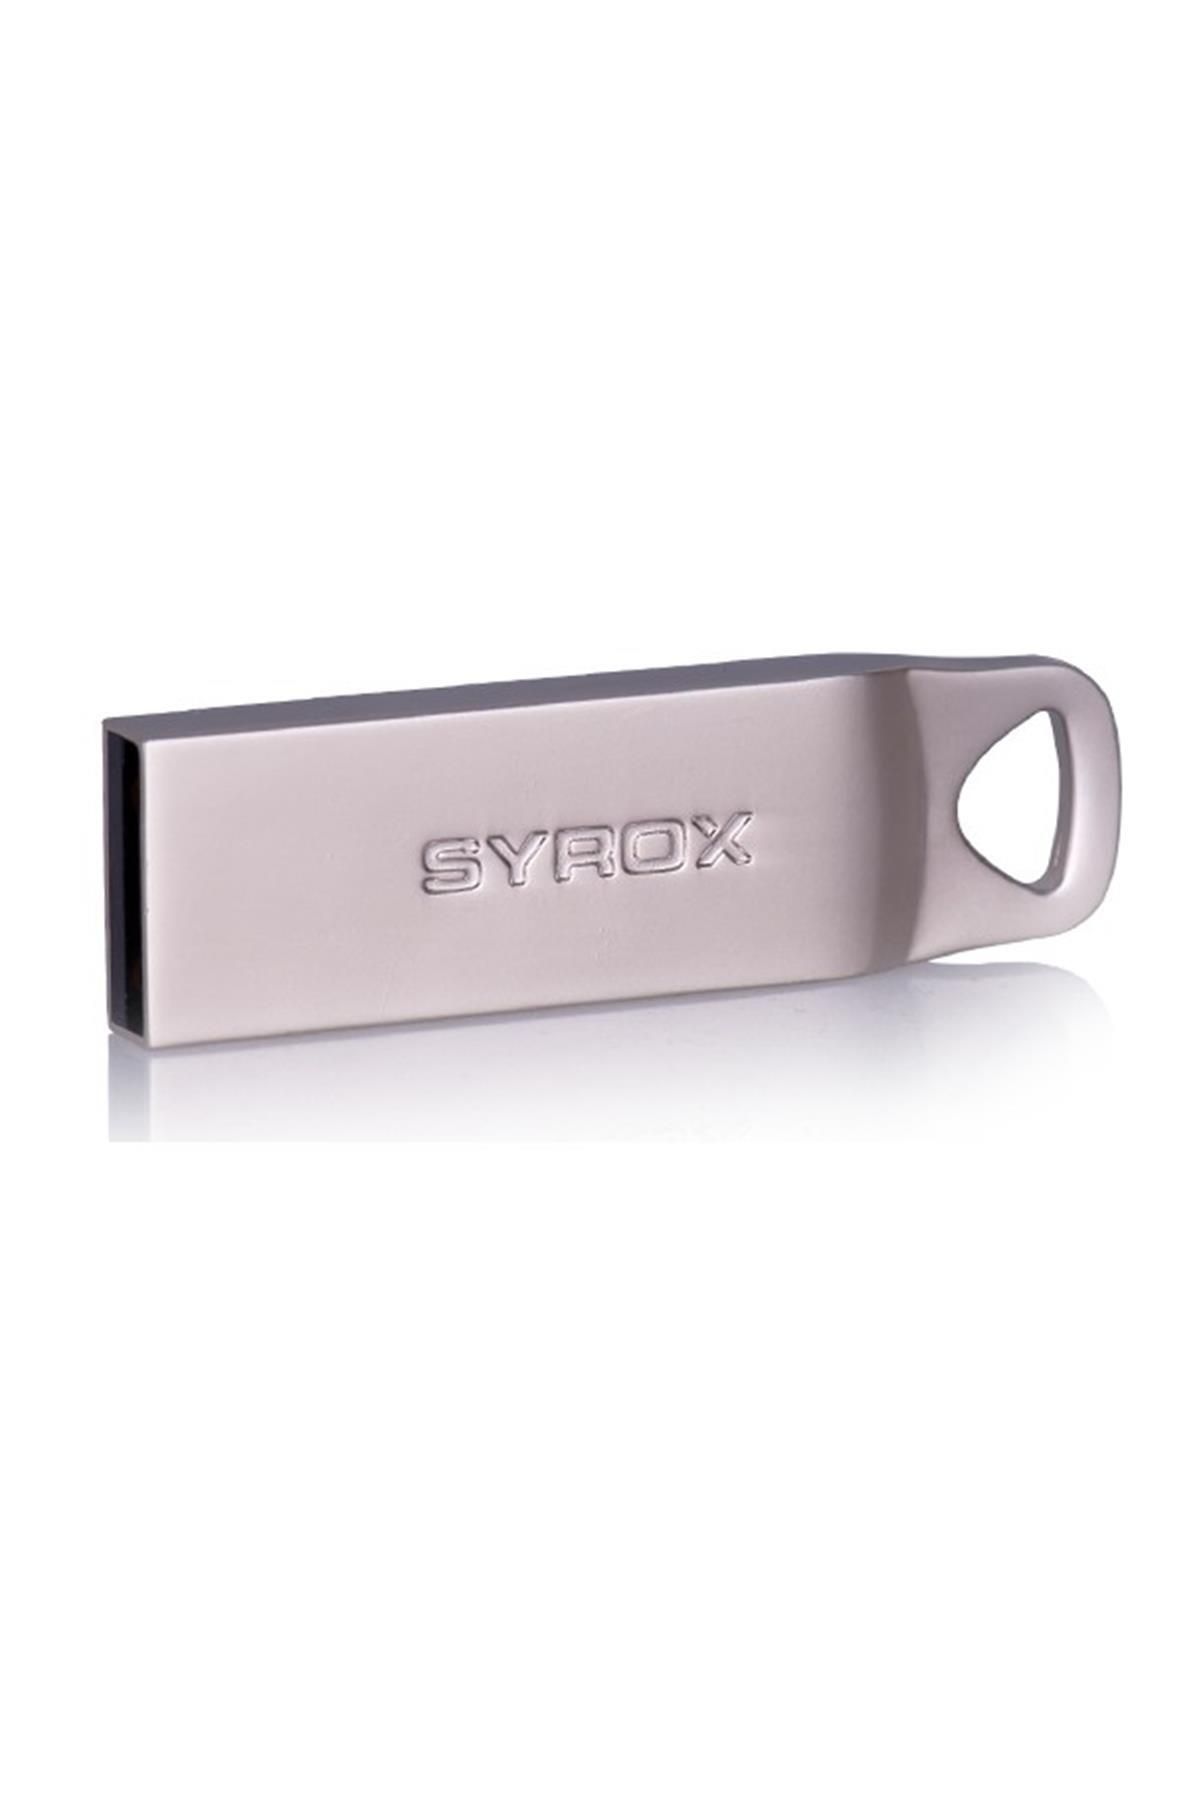 Syrox 16 Gb Metal 2 Usb Bellek Syx-Um16